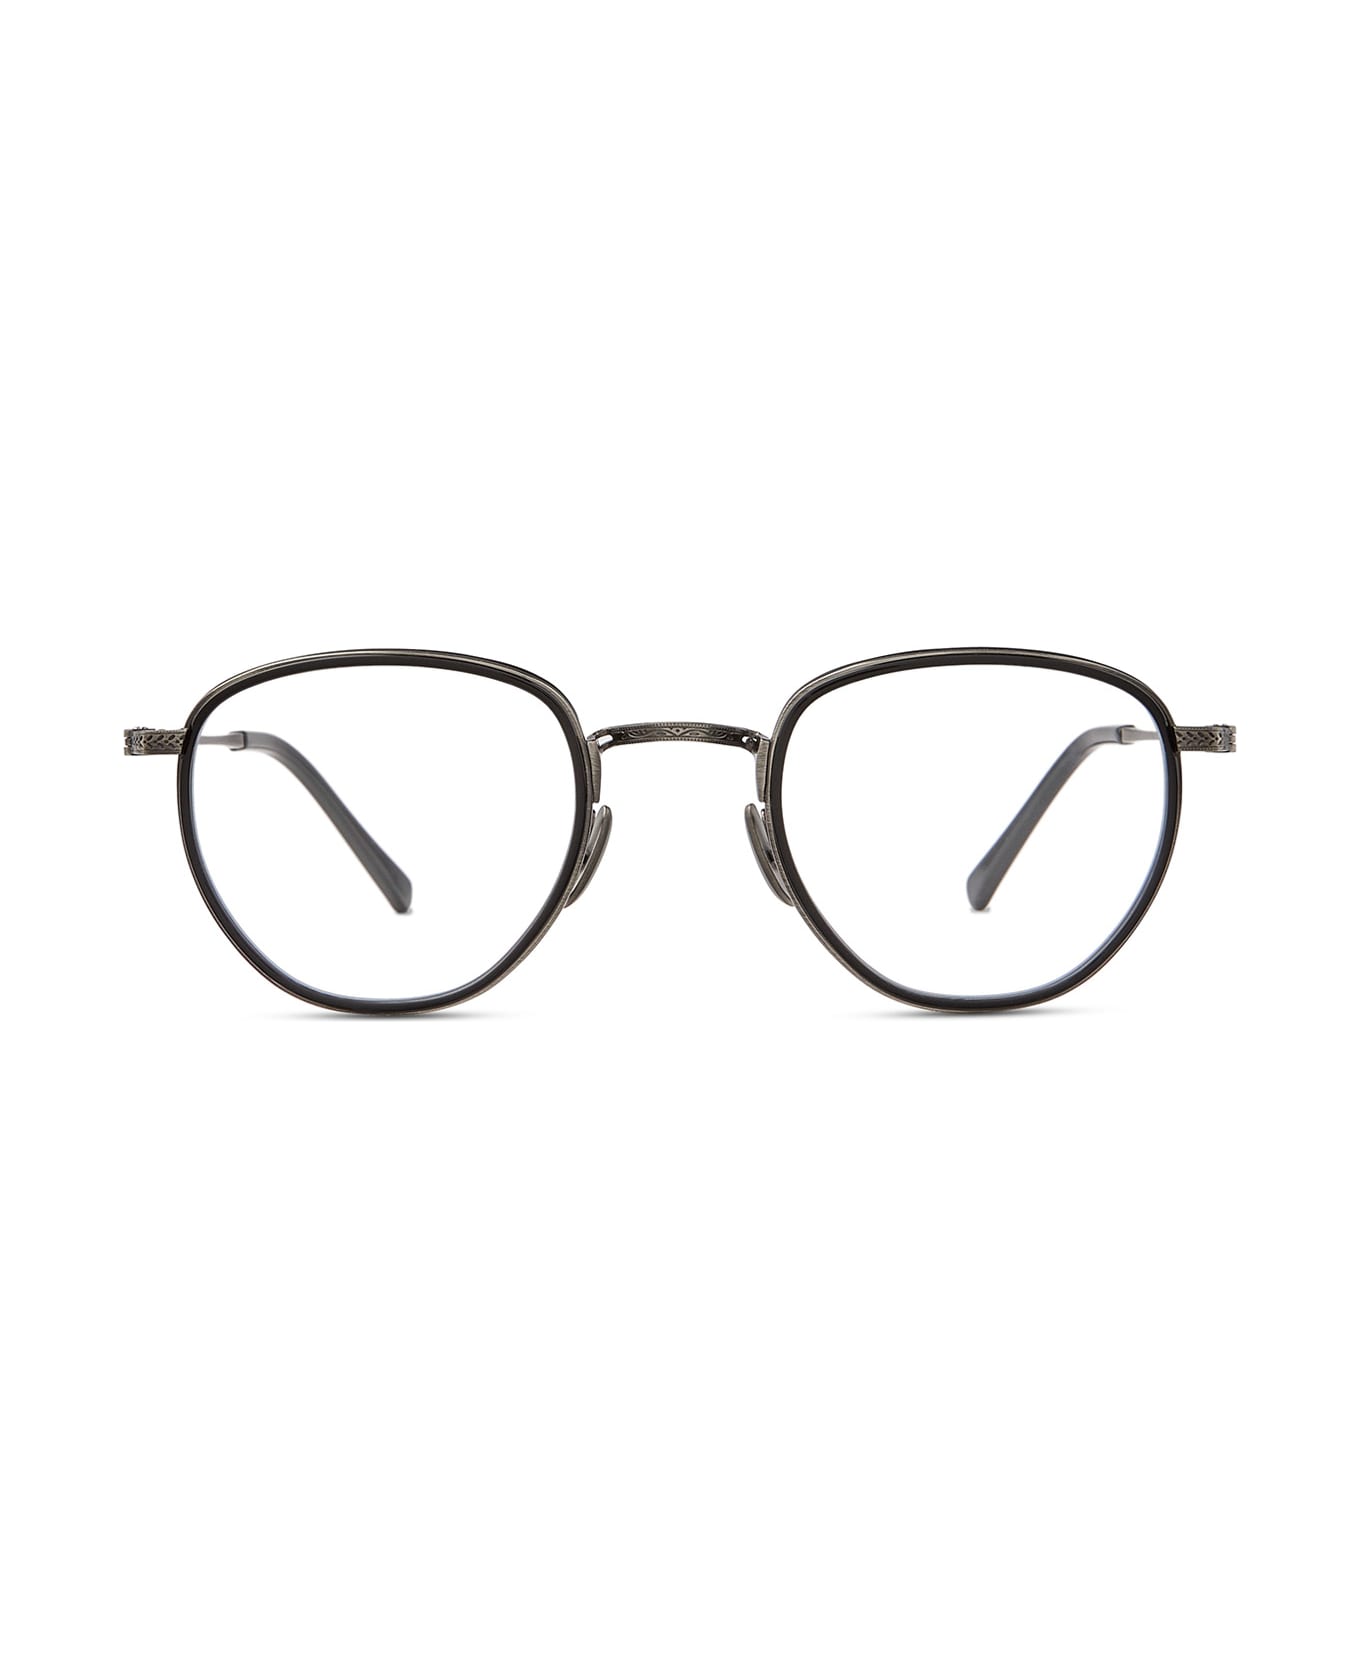 Mr. Leight Roku C Black-pewter Glasses - Black-Pewter